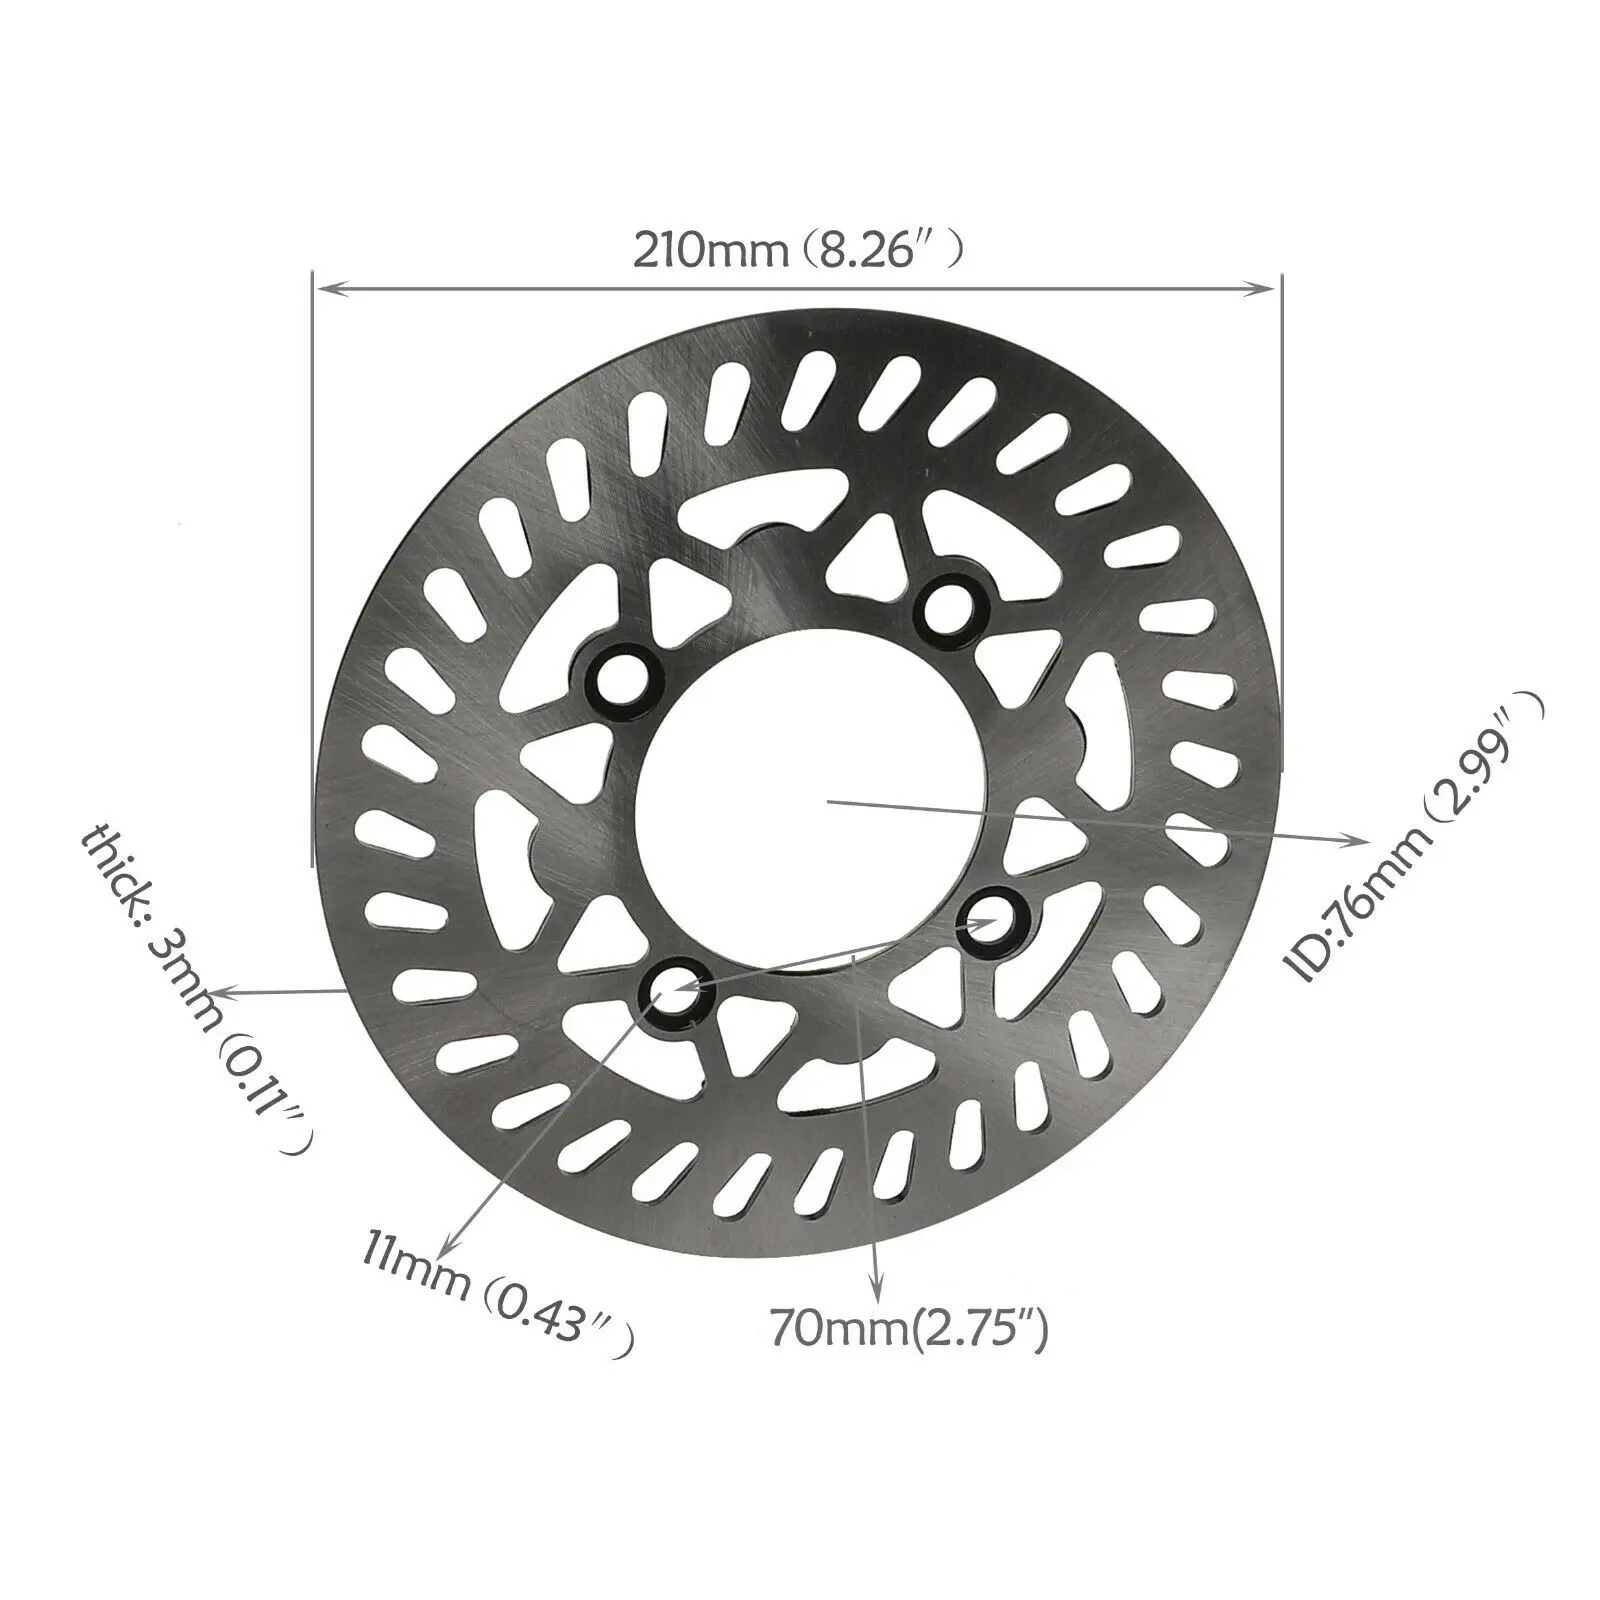 15mm Axle 1.6x17 70/100-17 Motorbike Front Wheel Rim Tire Tube Brake Disc Rotor 